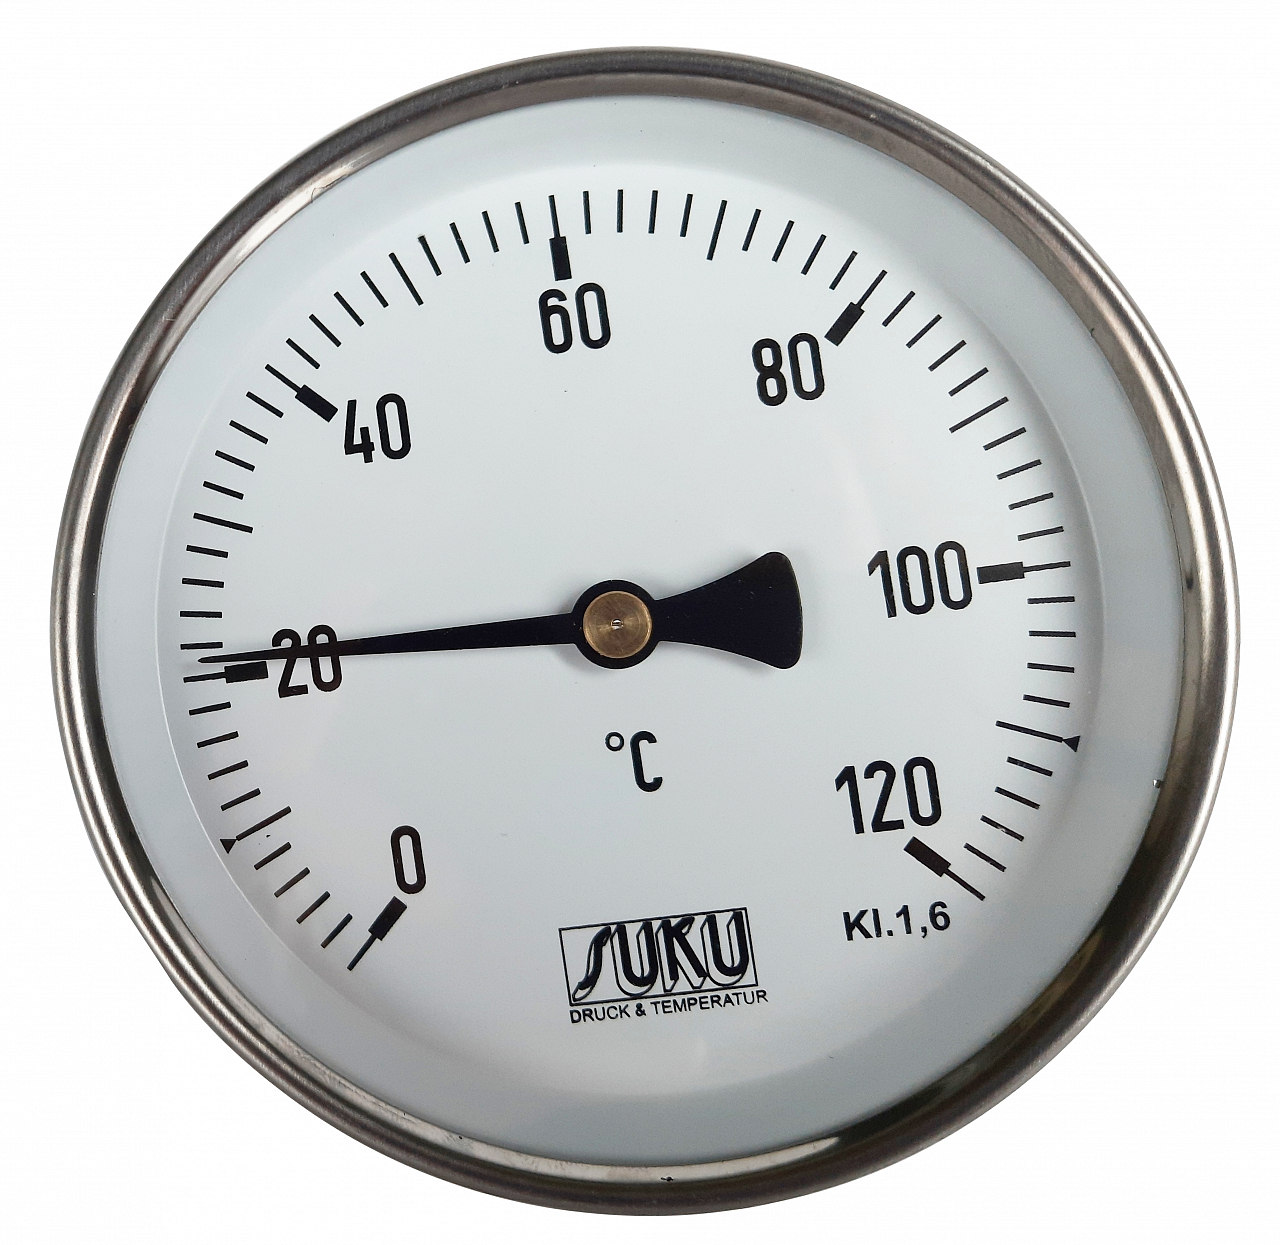 Bimetall-Anlege-Zeigerthermometer 0-120°C, Klasse 2,5, 6,10 €